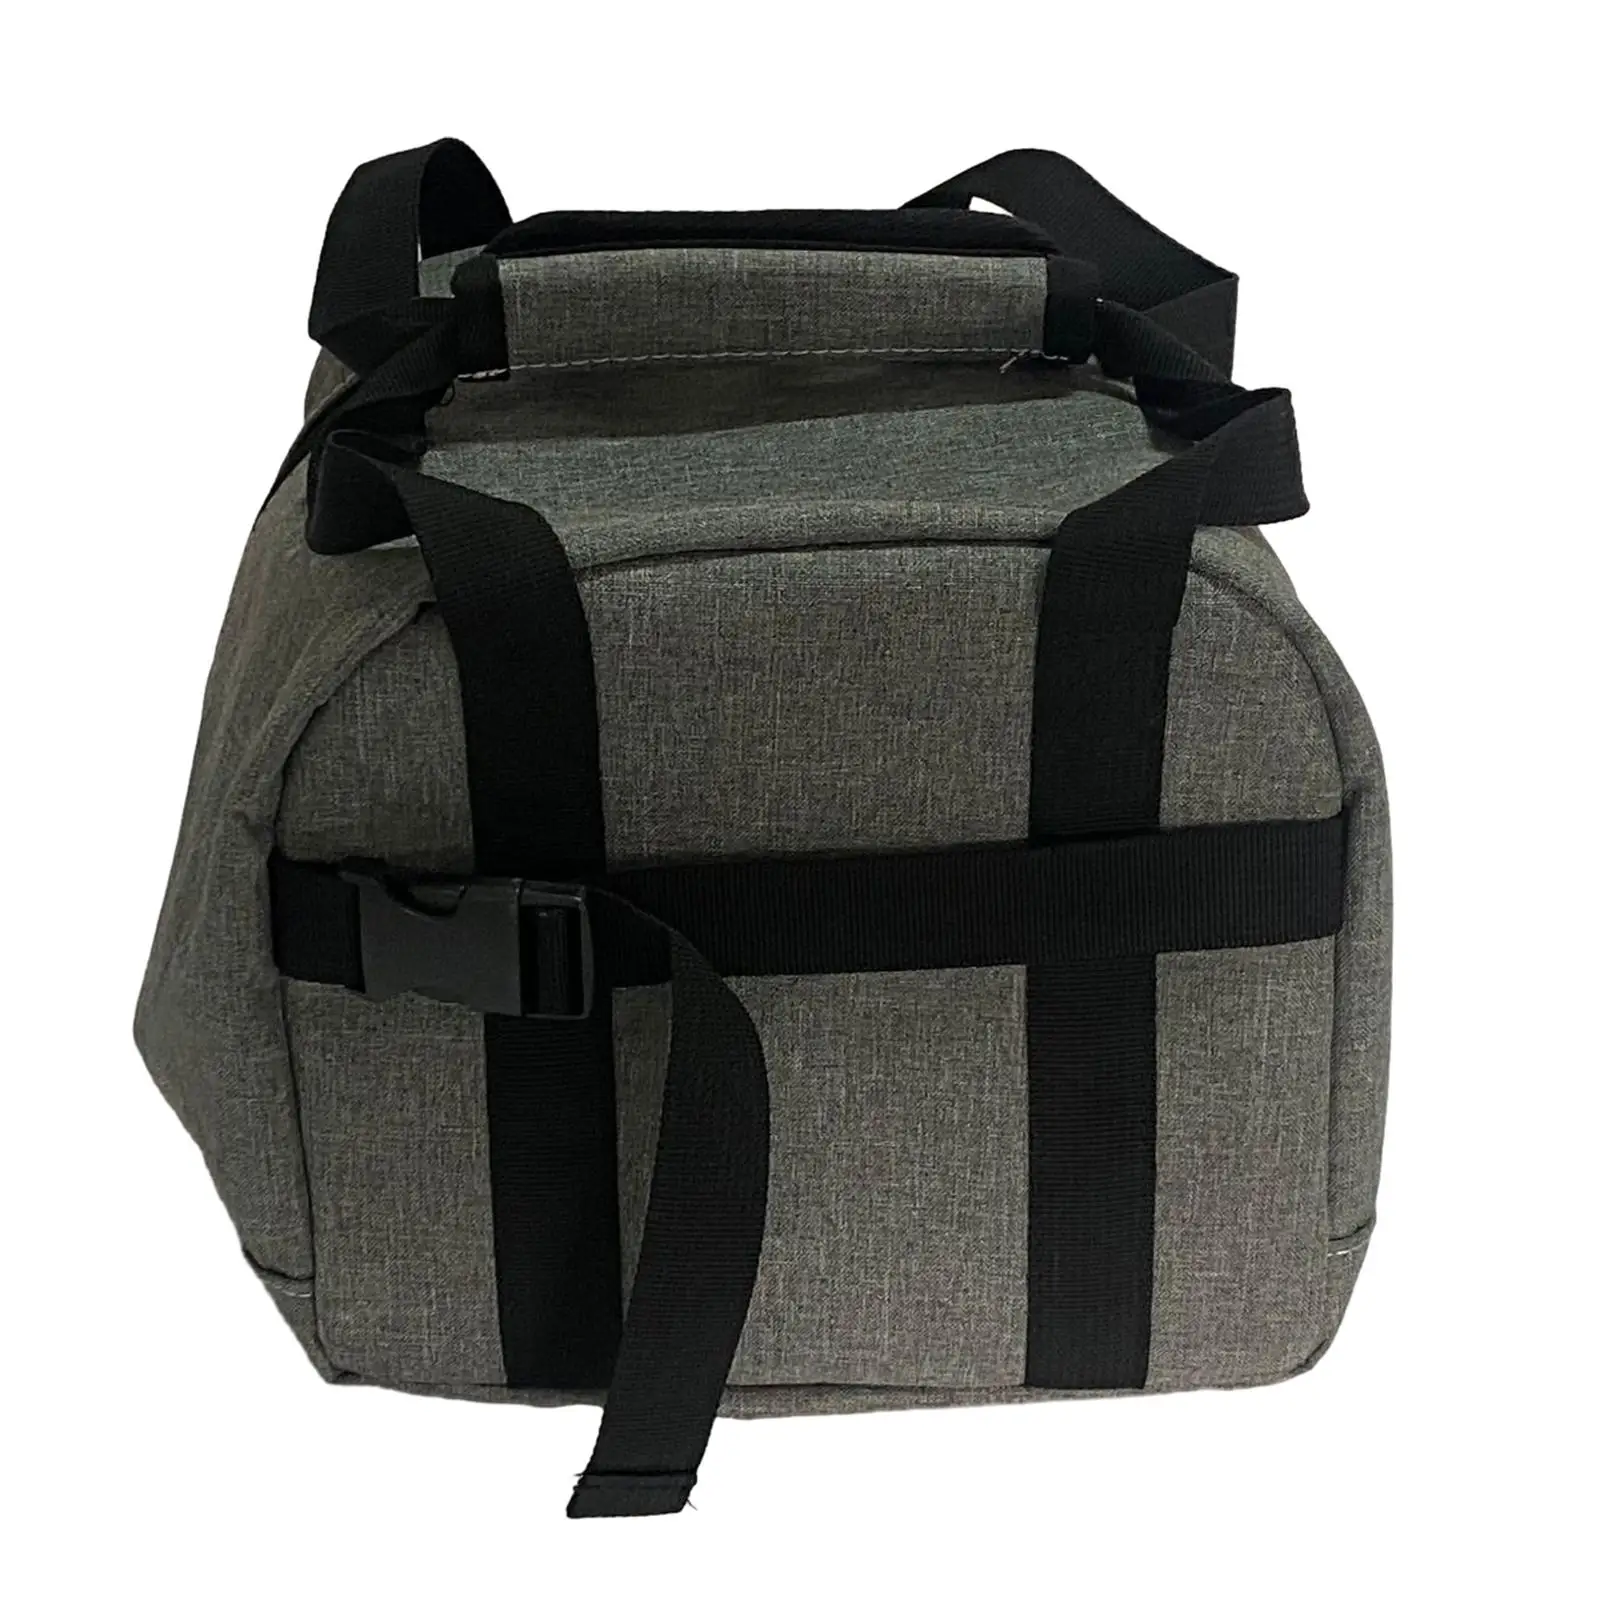 Single Bowling Ball Bag Handbag Compact with Handle with External Mesh Pocket Bowling Tote Bowling Ball Holder for Women Men